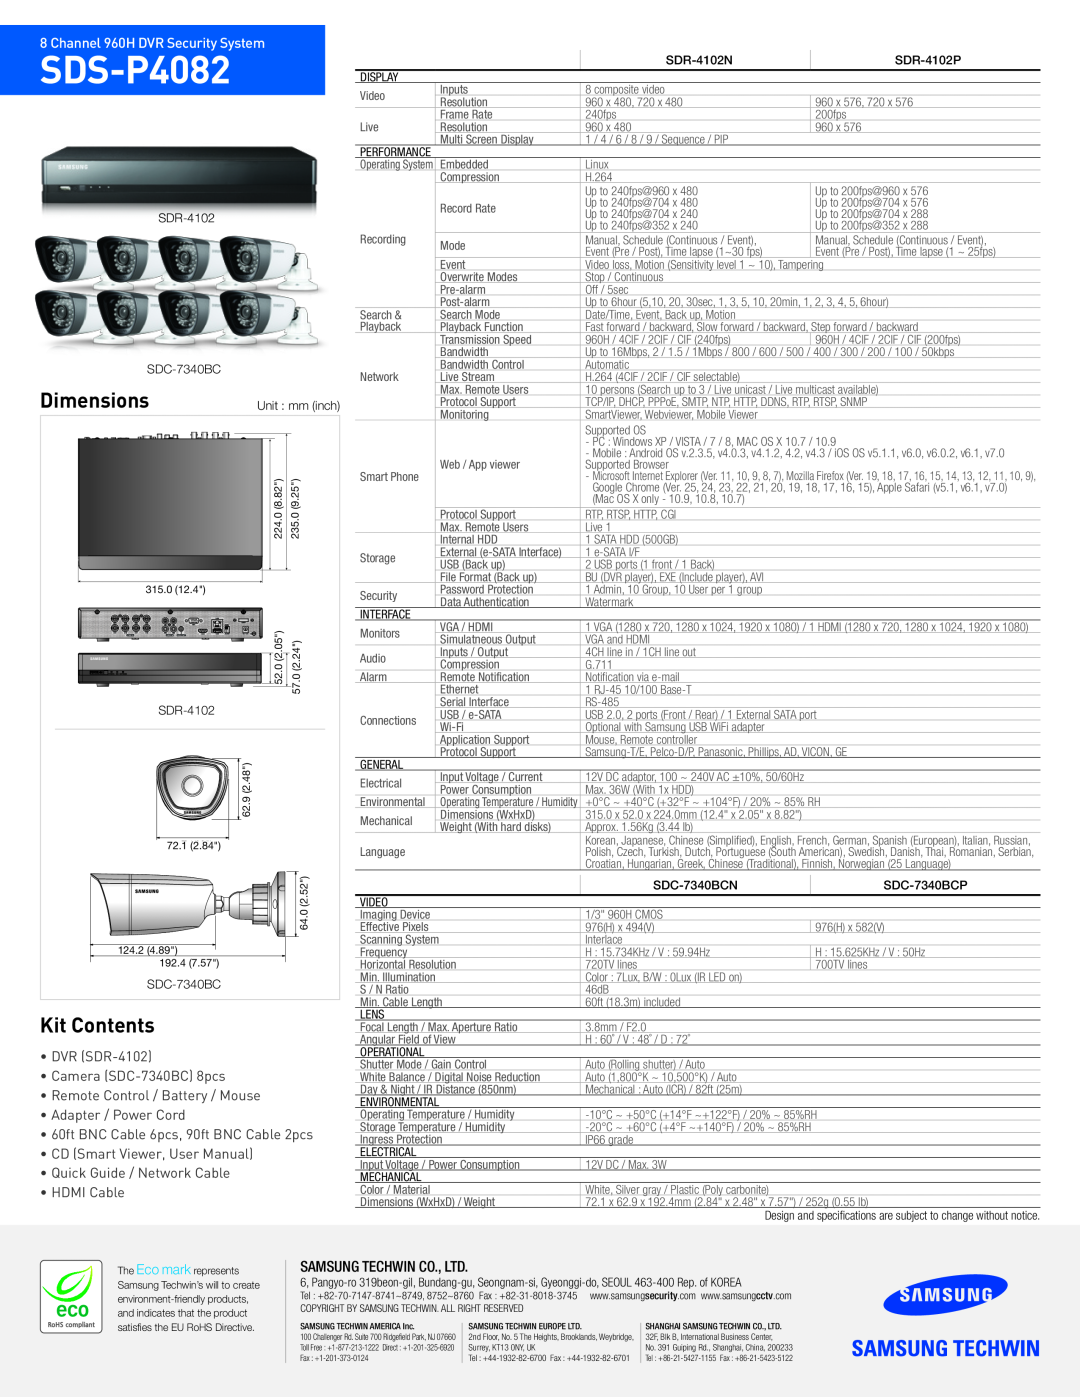 Samsung SDS-P4082 manual Dimensions, Kit Contents, Channel 960H DVR Security System, DVR SDR-4102 Camera SDC-7340BC8pcs 